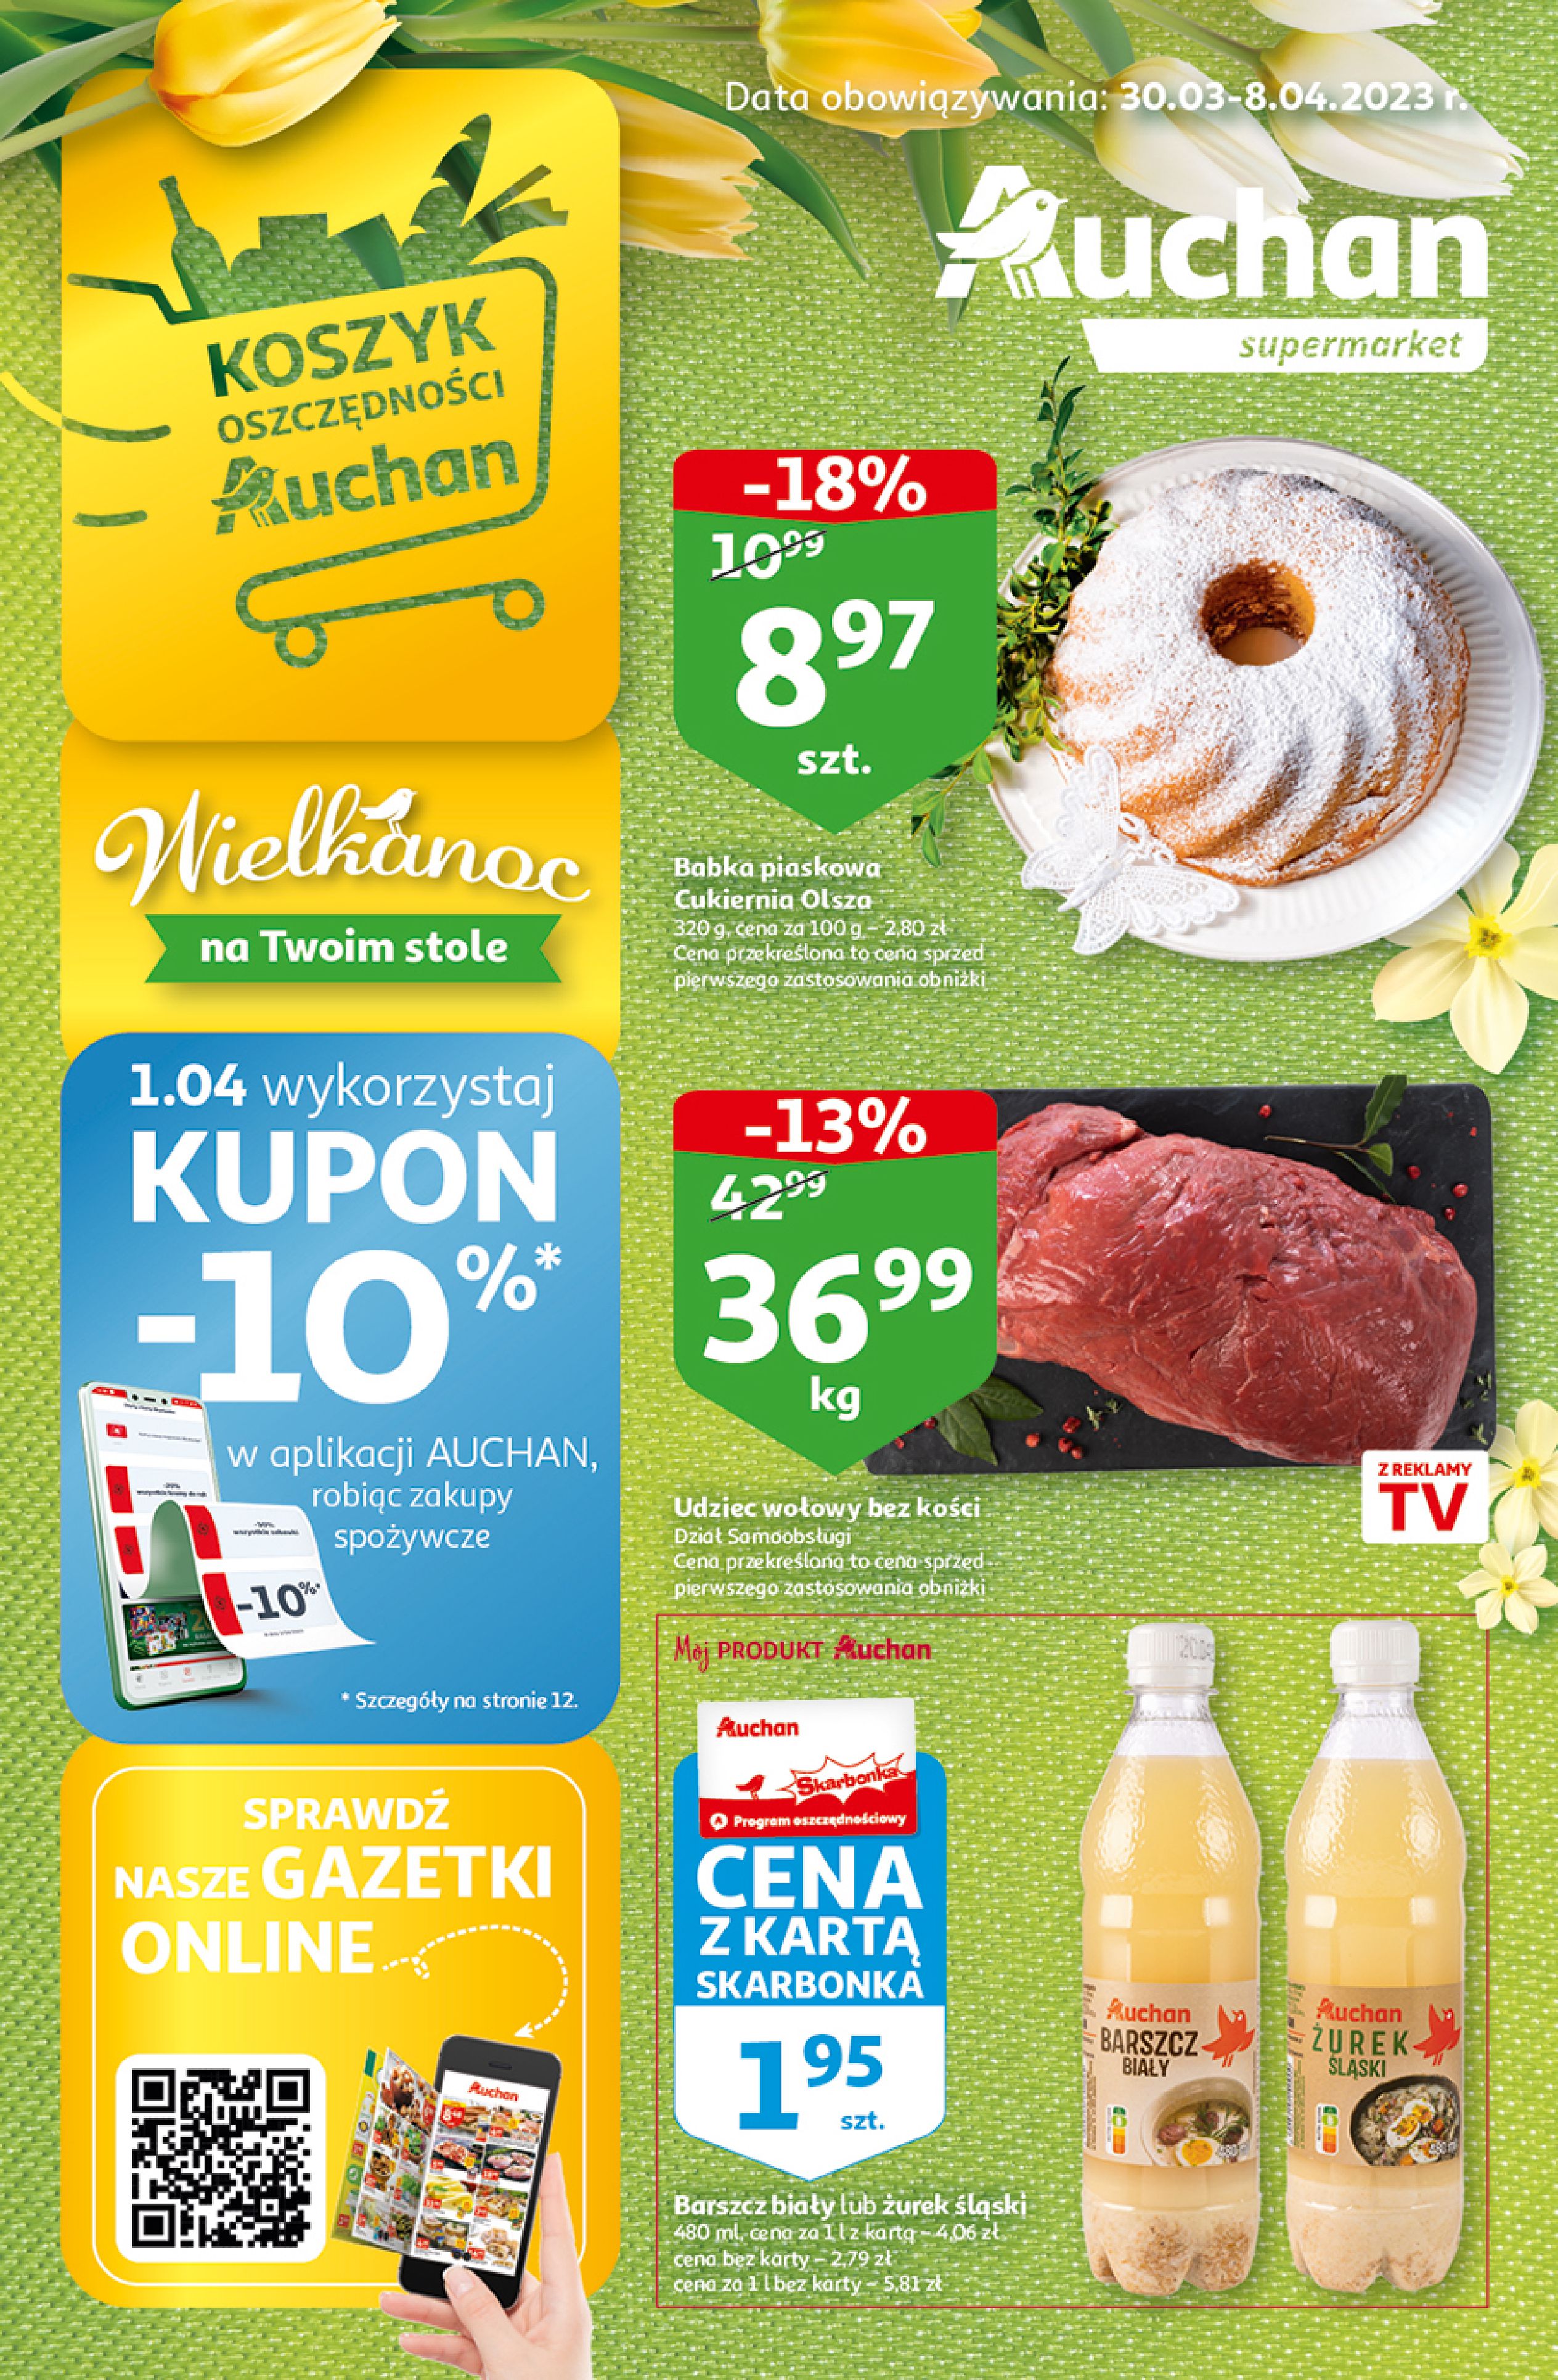 Gazetka Auchan: Gazetka Auchan supermarket do 8.04. - 29.03.2023